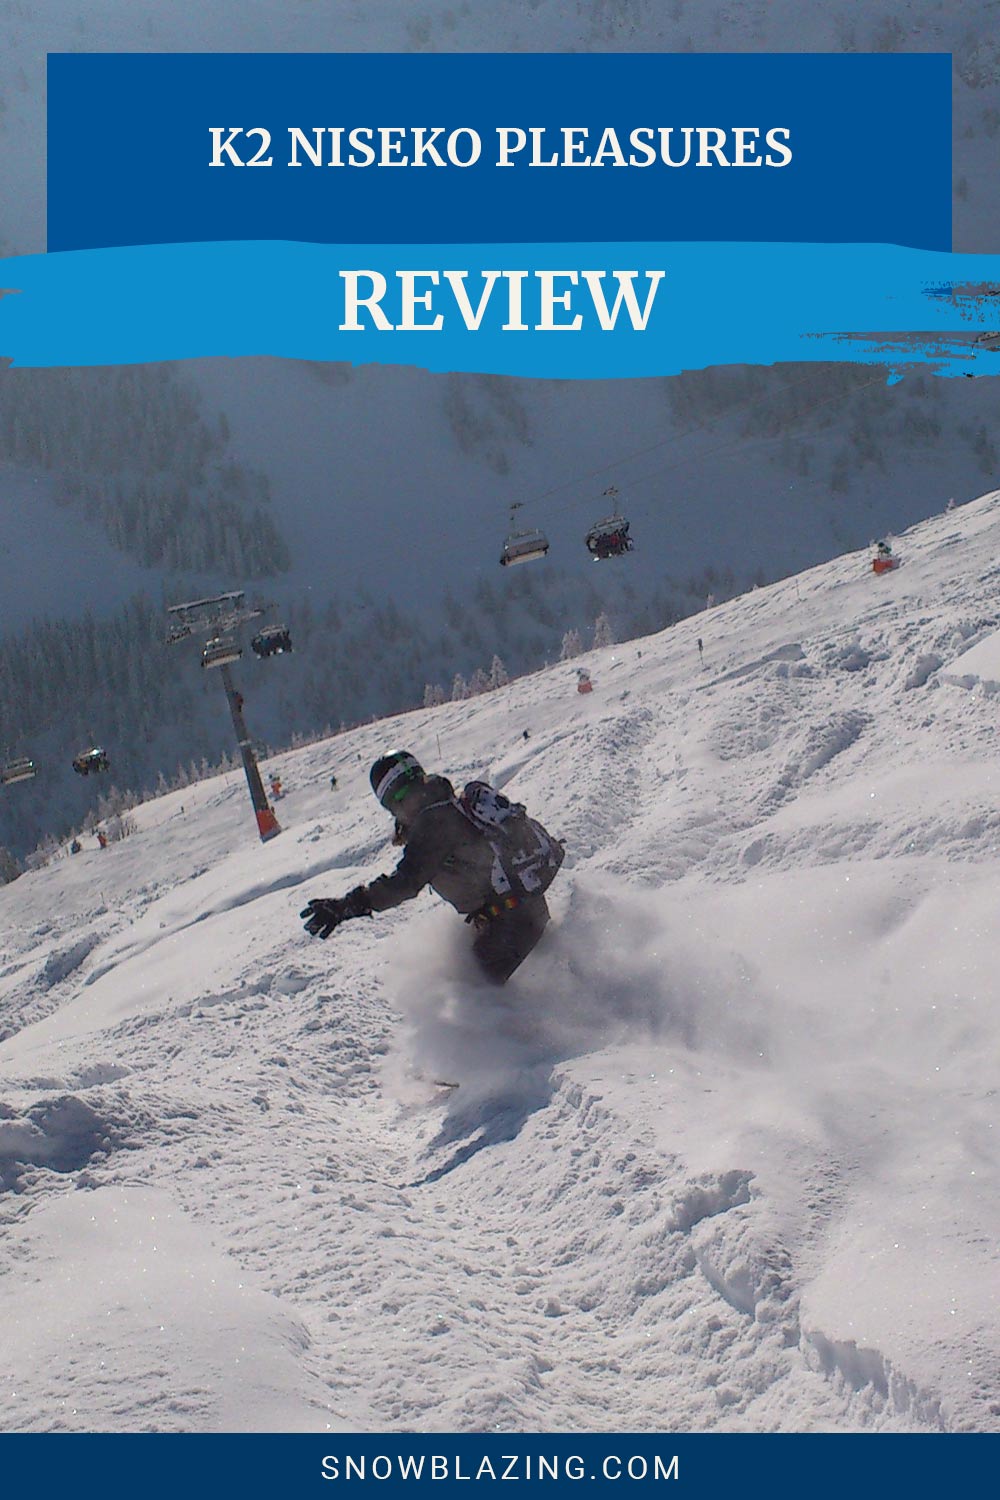 Person snowboarding downhill - K2 Niseko Pleasures Review